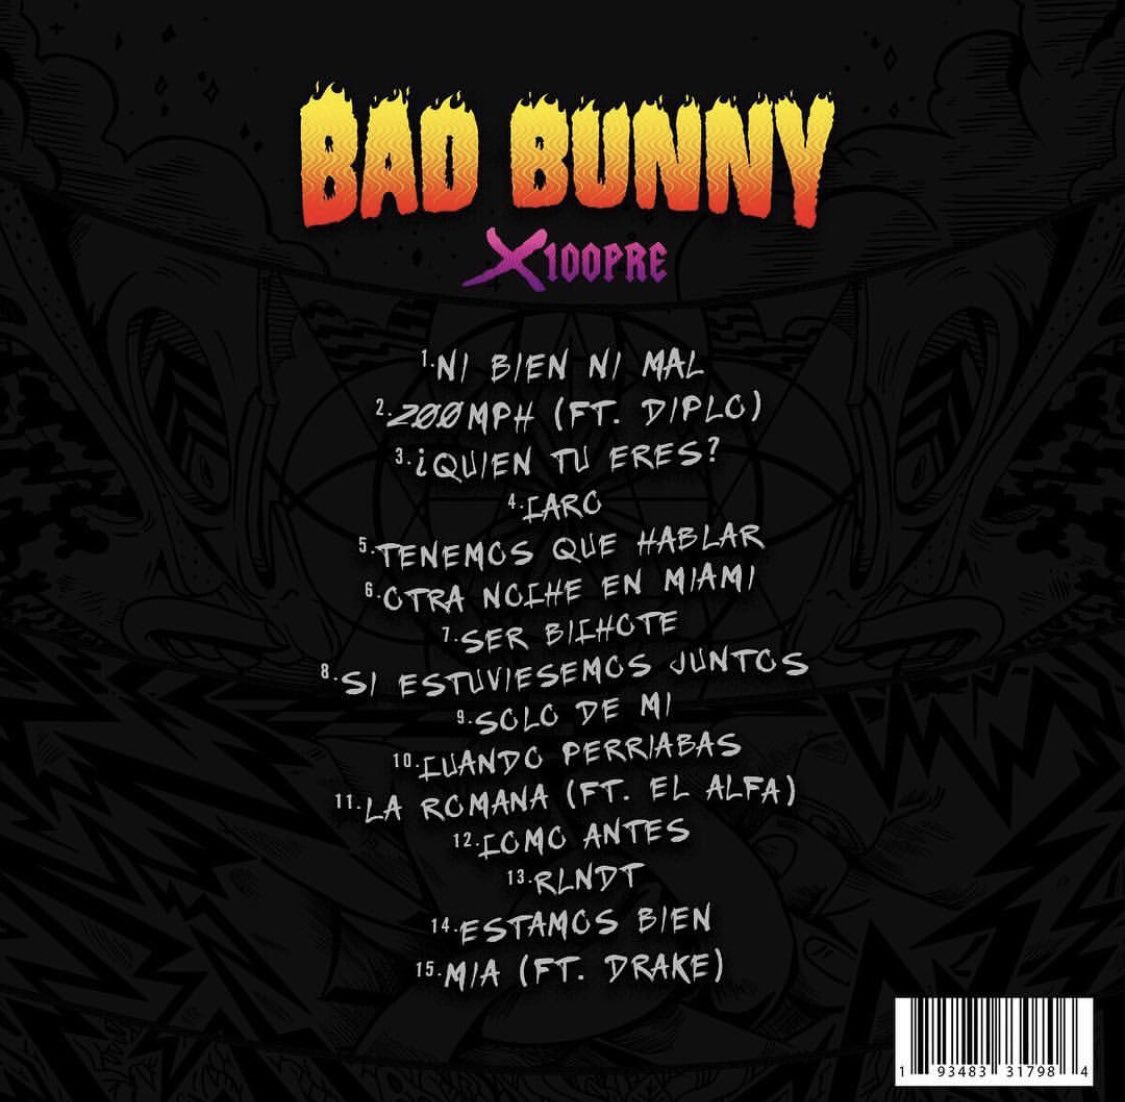 Apple Music On Twitter The Countdown Is On Badbunny S Album Is Coming Tonight X100pre - la romana bad bunny roblox id